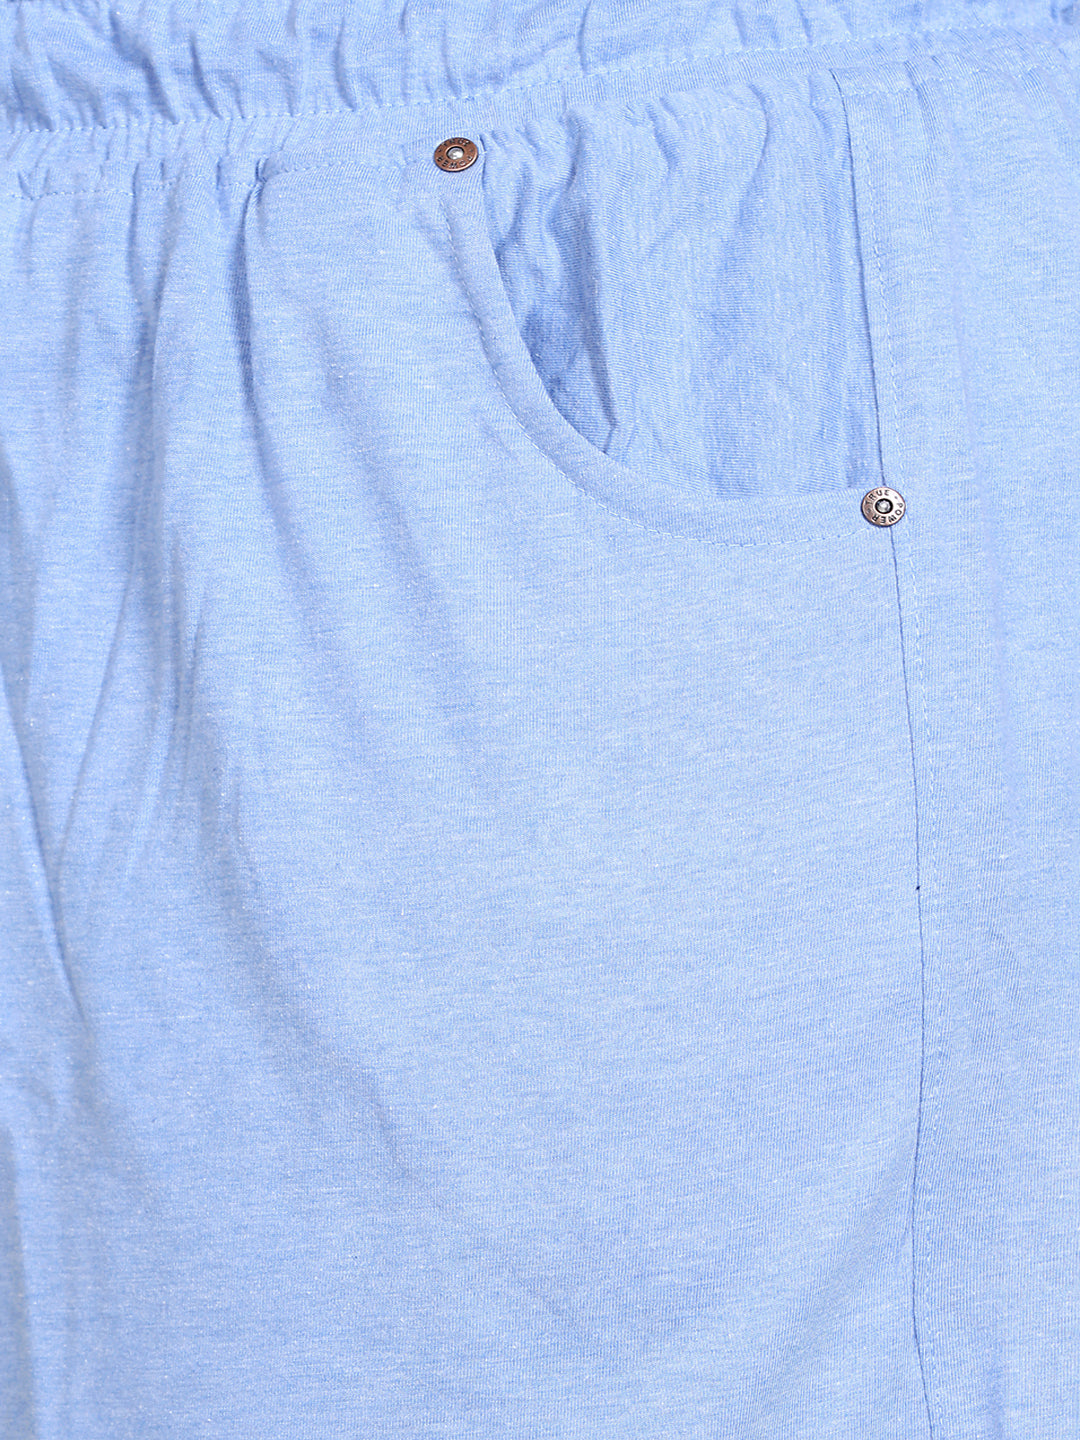 Cotton Shorts For Women - Plain Bermuda - Sky Blue